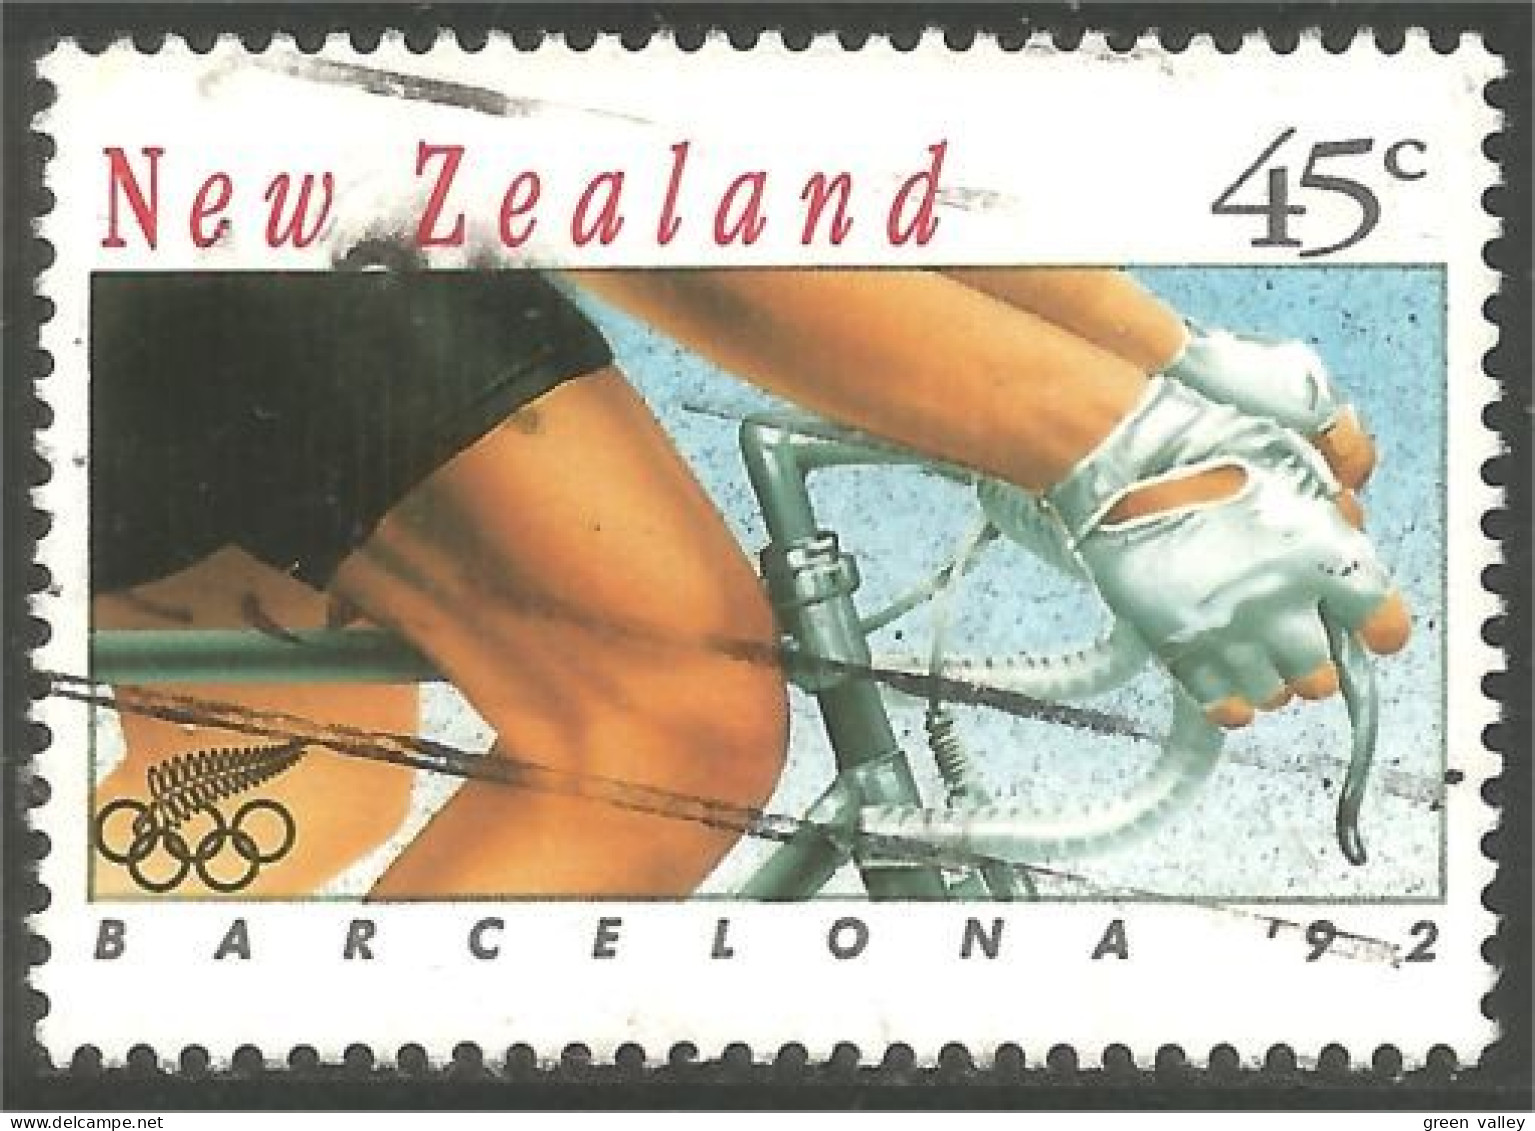 706 New Zealand Olympics Barcelona Cycling Bicycle Race Fahrrad Bicyclette Vélo Cyclisme (NZ-155c) - Ciclismo